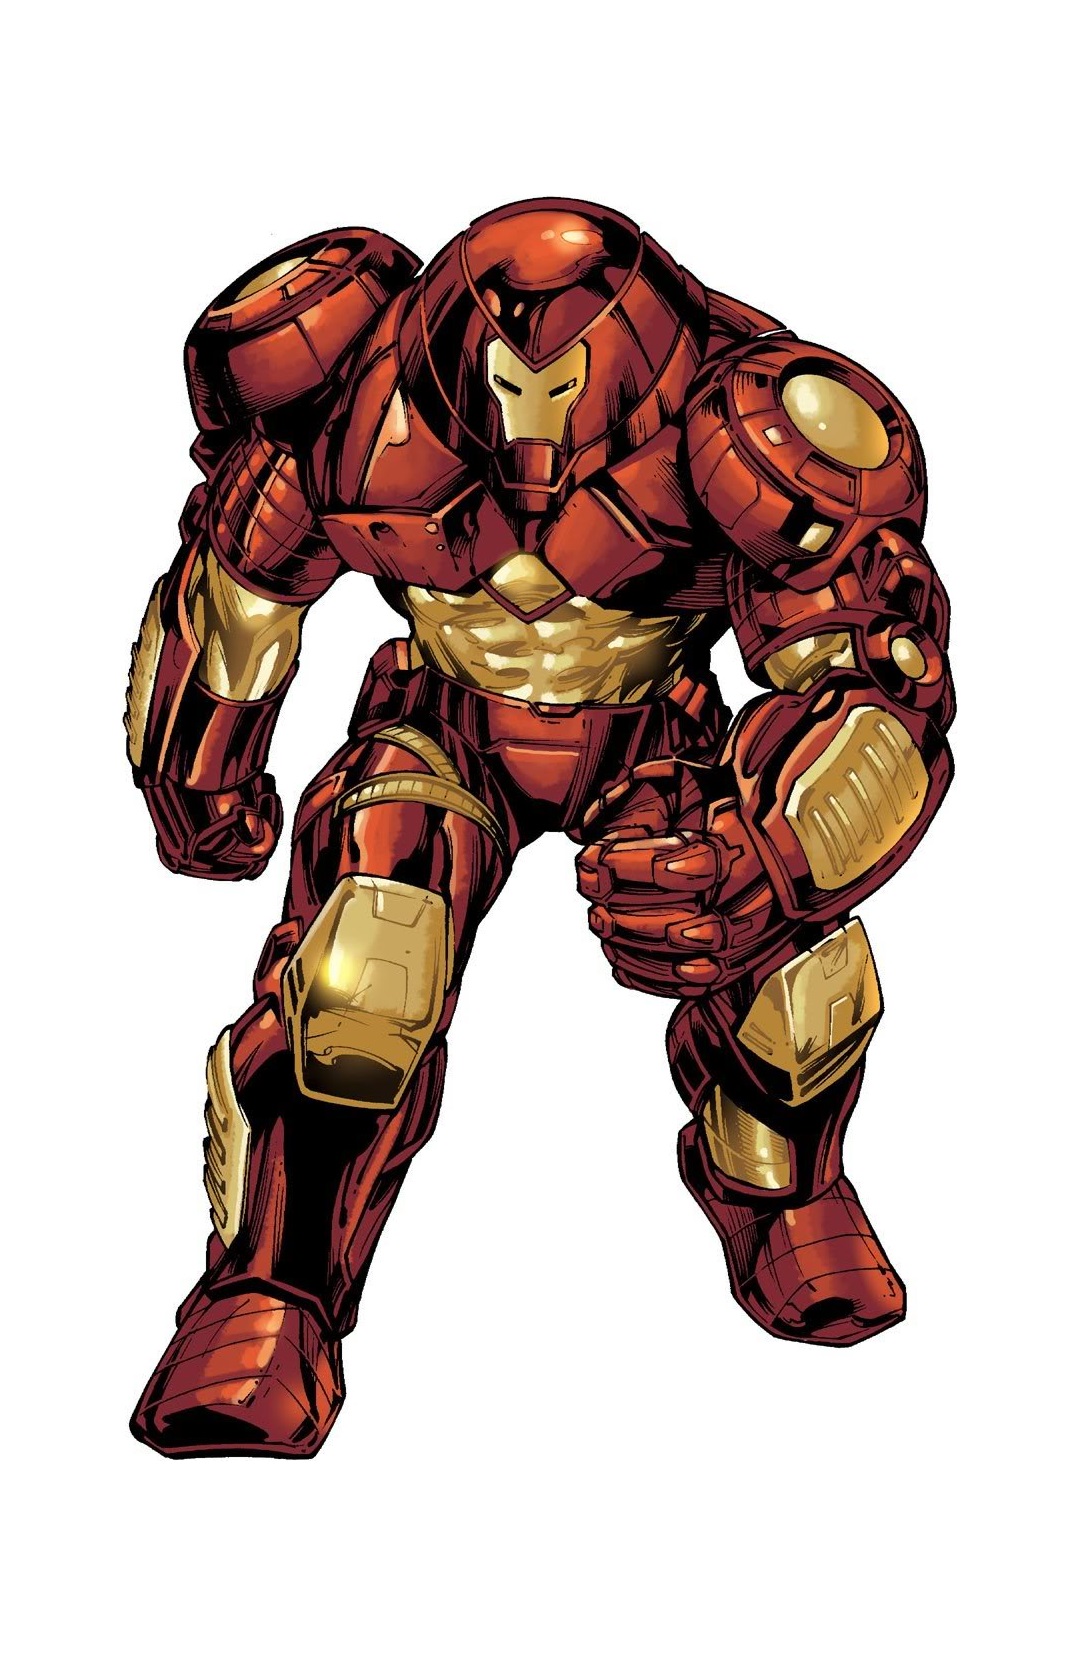 Disney Marvel Iron Man Hulk Buster Armor suit Christmas Ornament | eBay